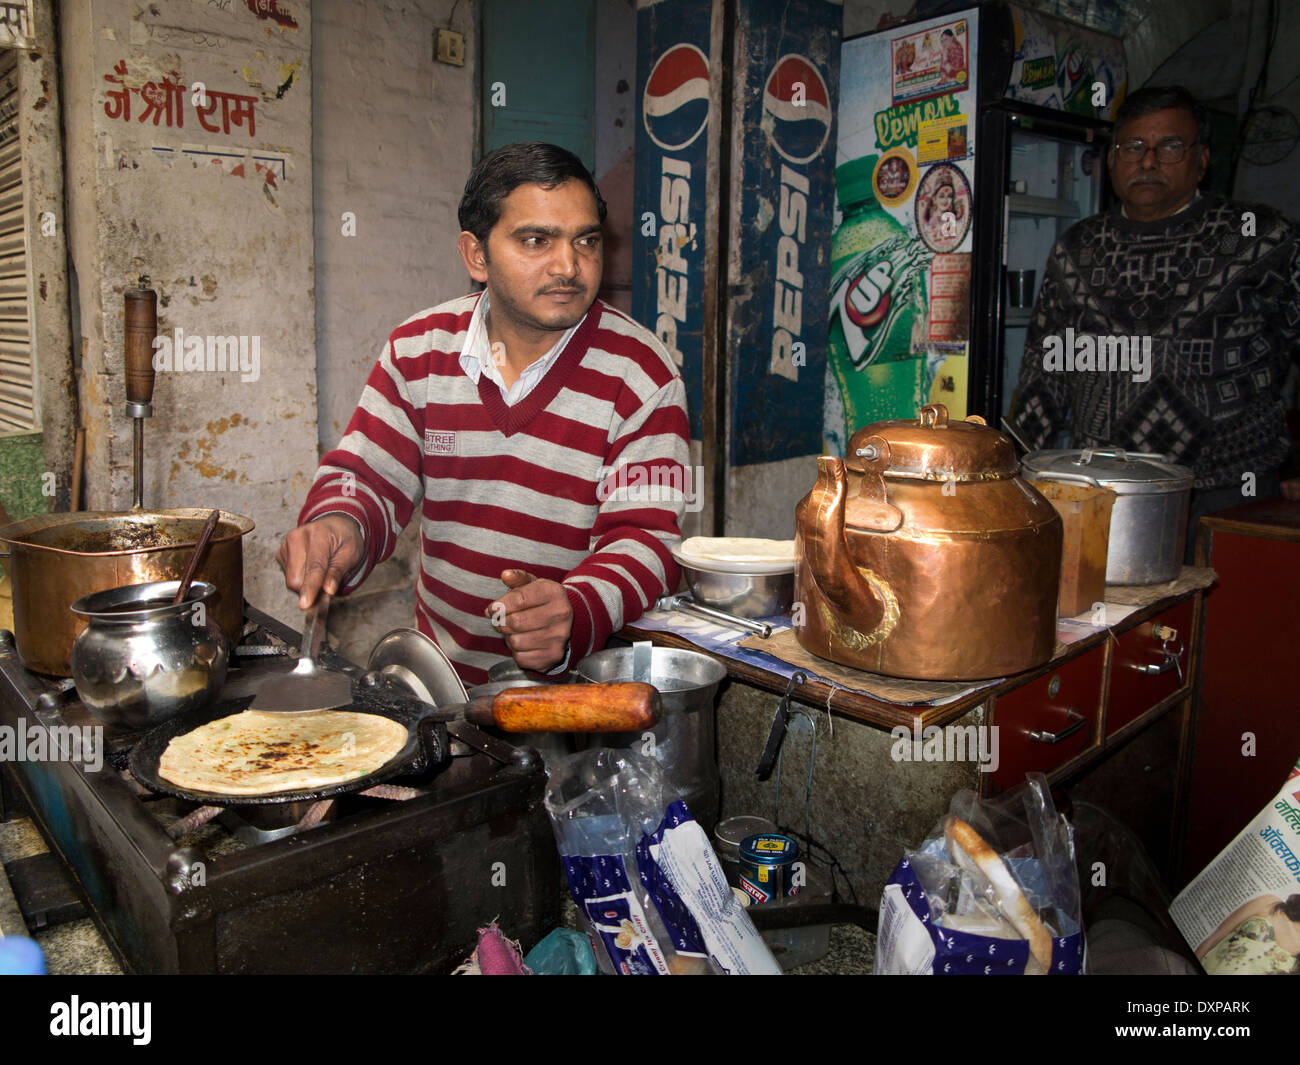 India, Punjab, Amritsar, street food, man cooking paratha on tava at roadside cafe Stock Photo